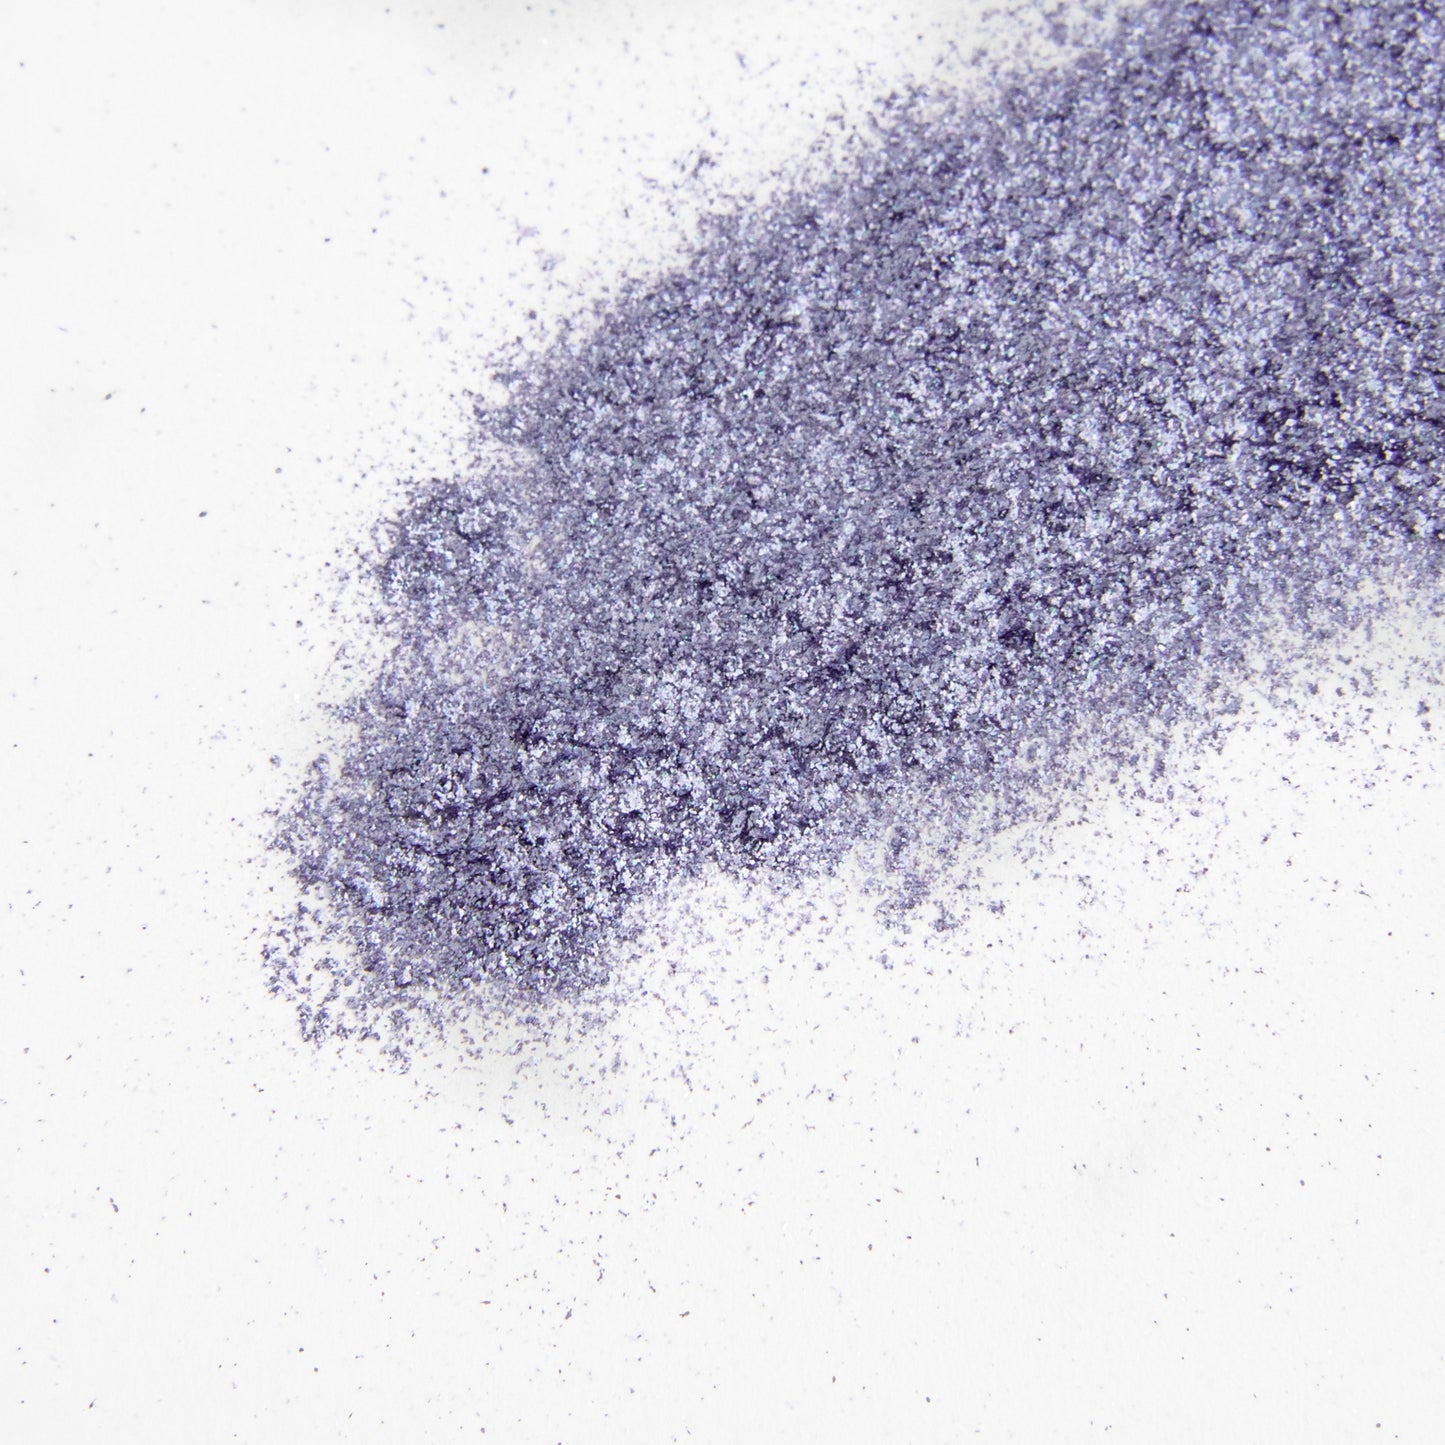 Purple Edible Glitter 4g